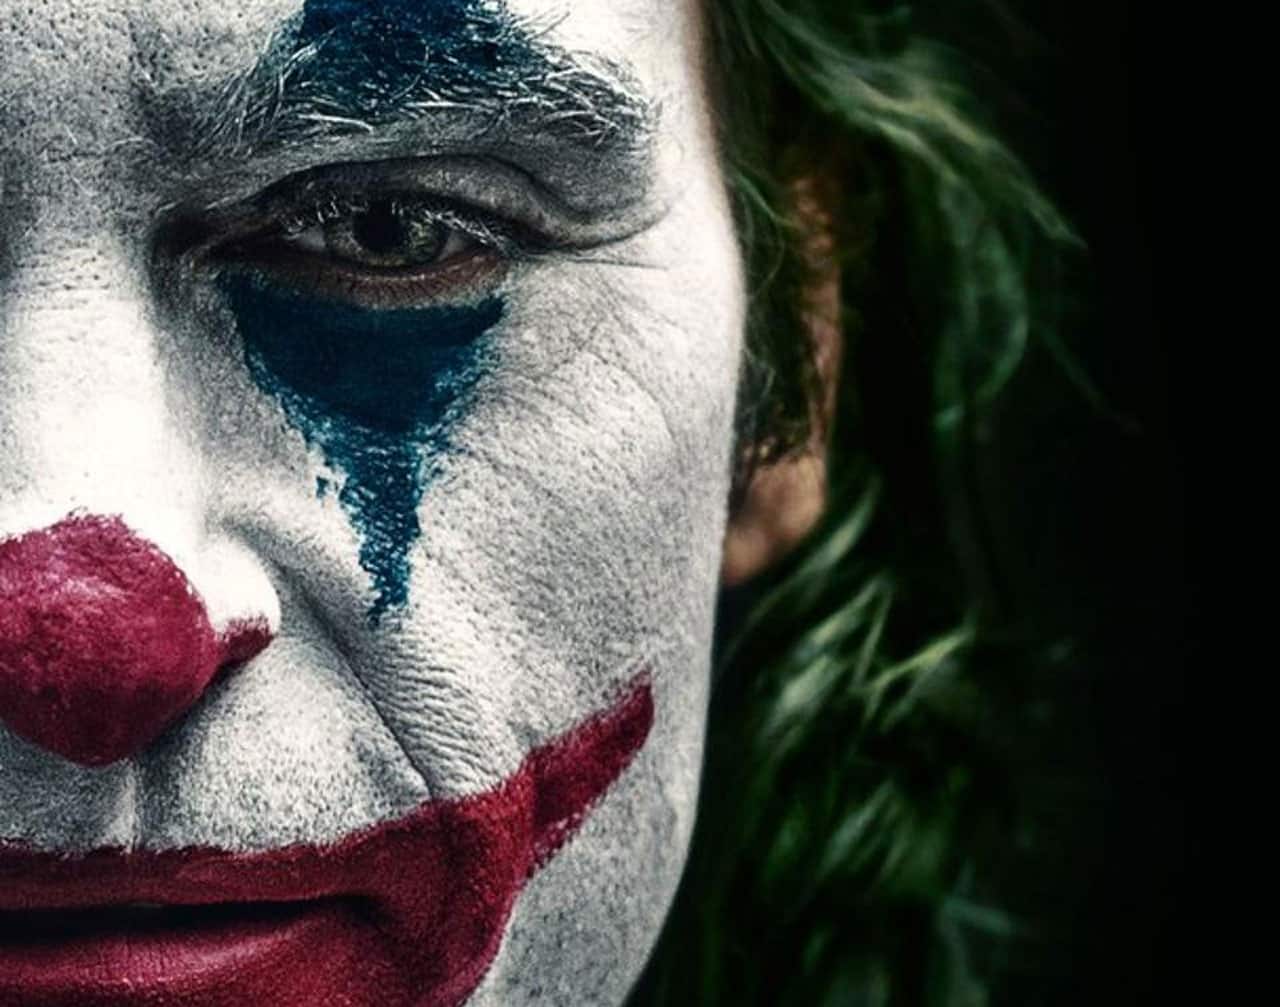 Joker Oscar Nominations 2020 Revealed Joker and The Irishman Lead Nominees